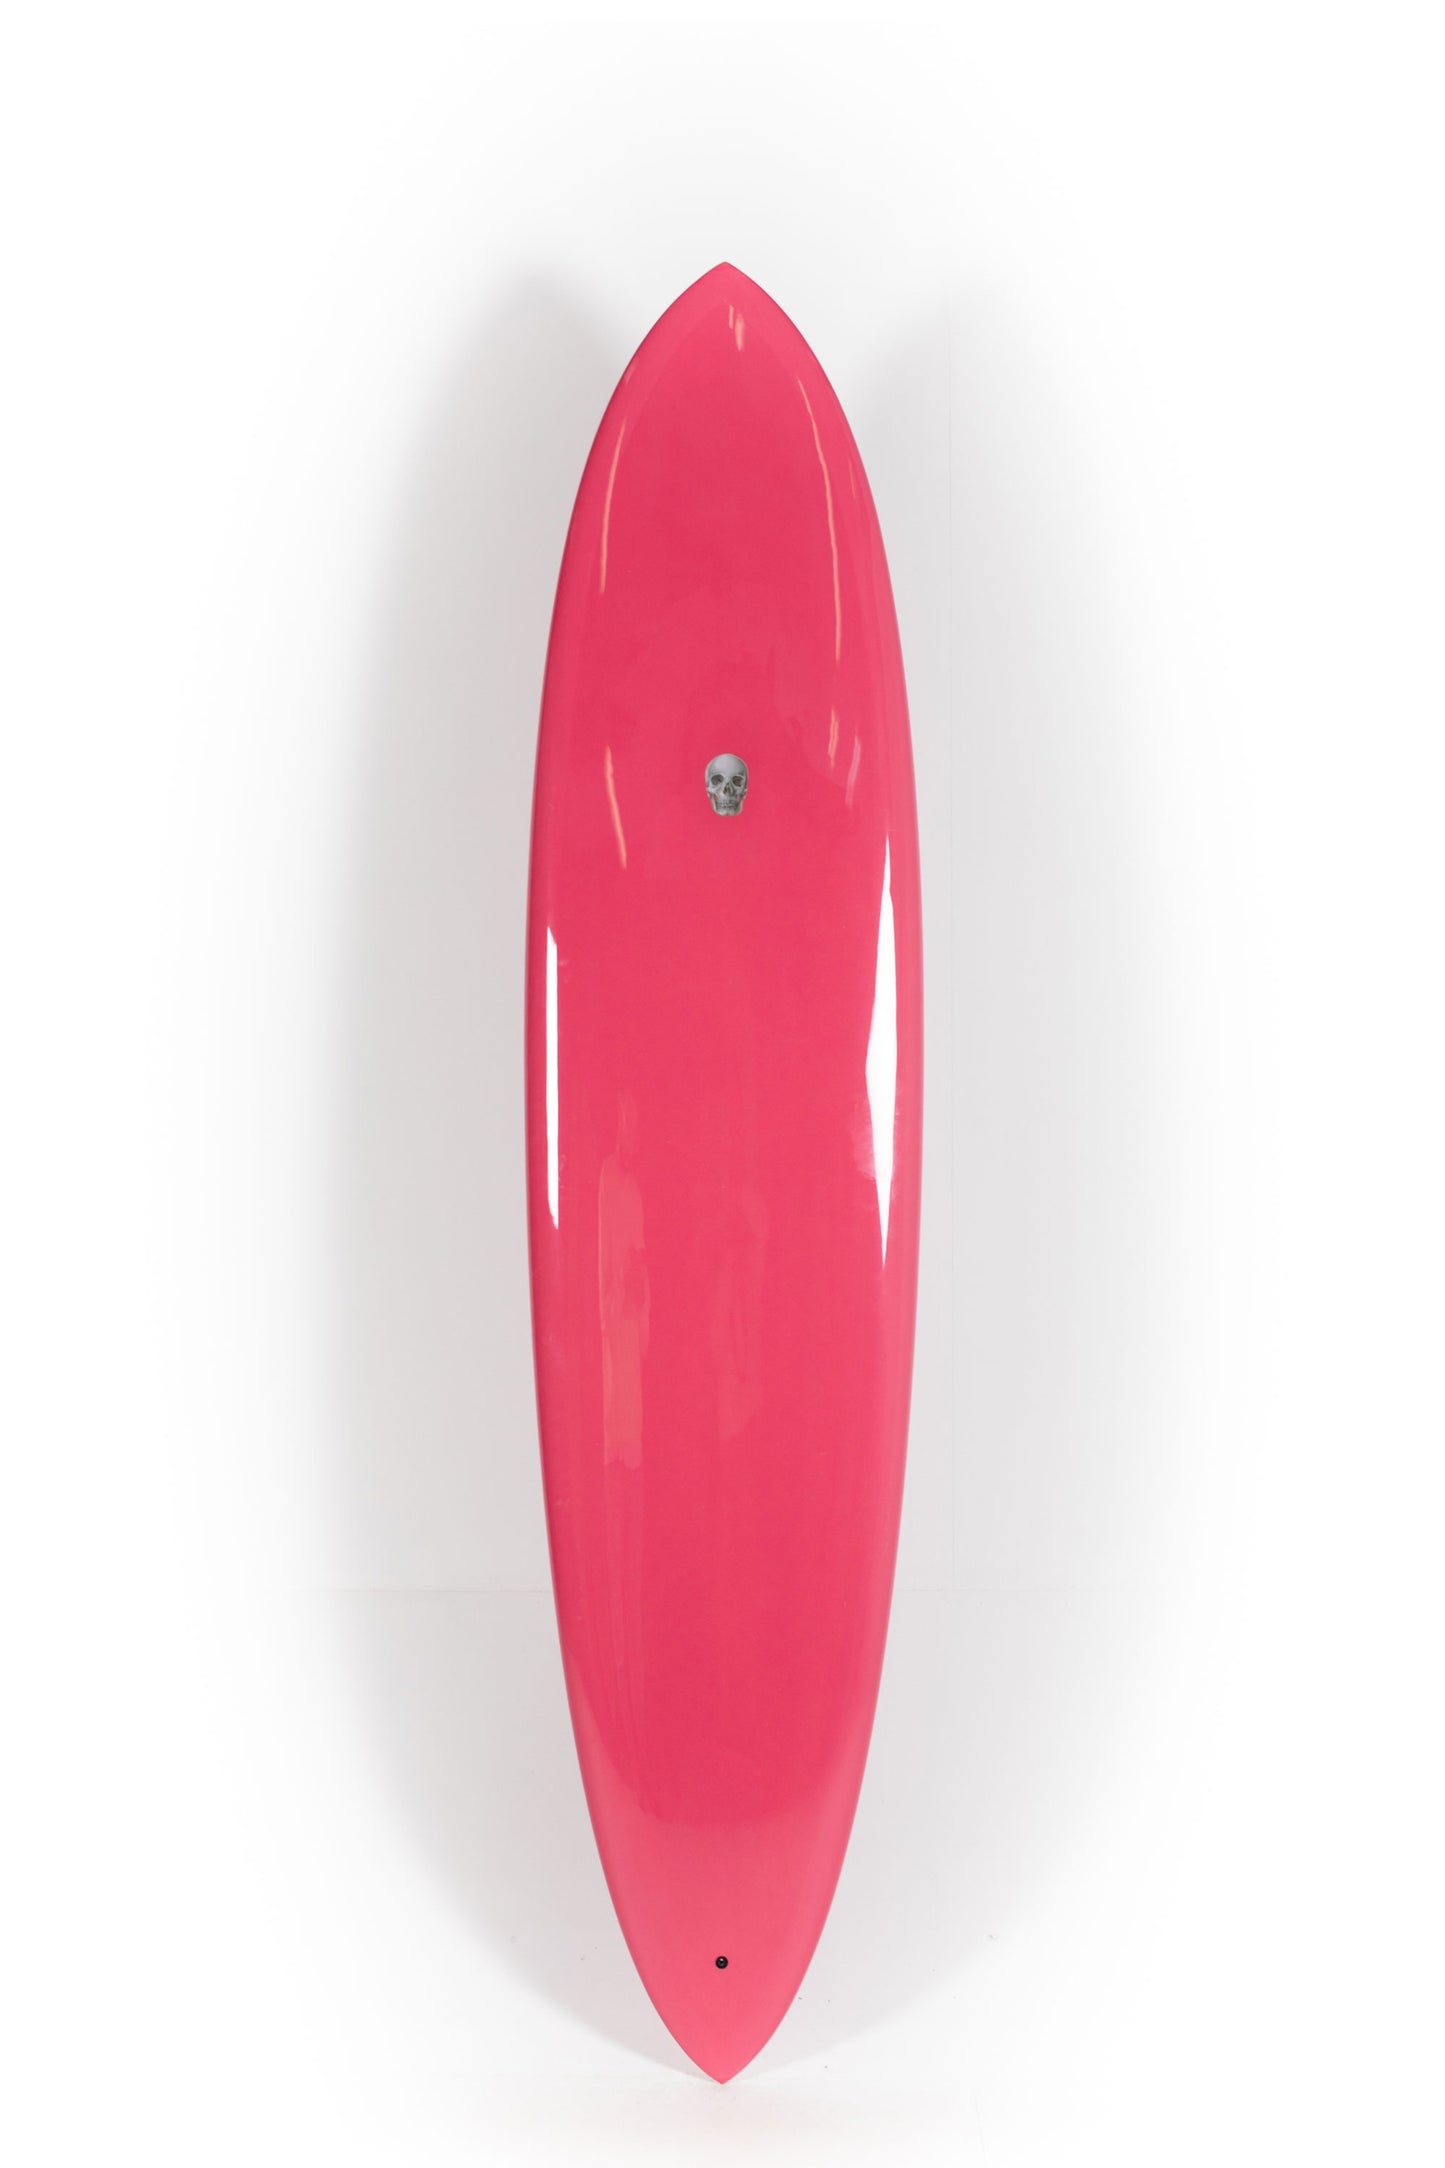 Pukas Surf Shop - Christenson Surfboards - C-BUCKET - 8'0" x 21 1/2 x 2 7/8 - CX05023